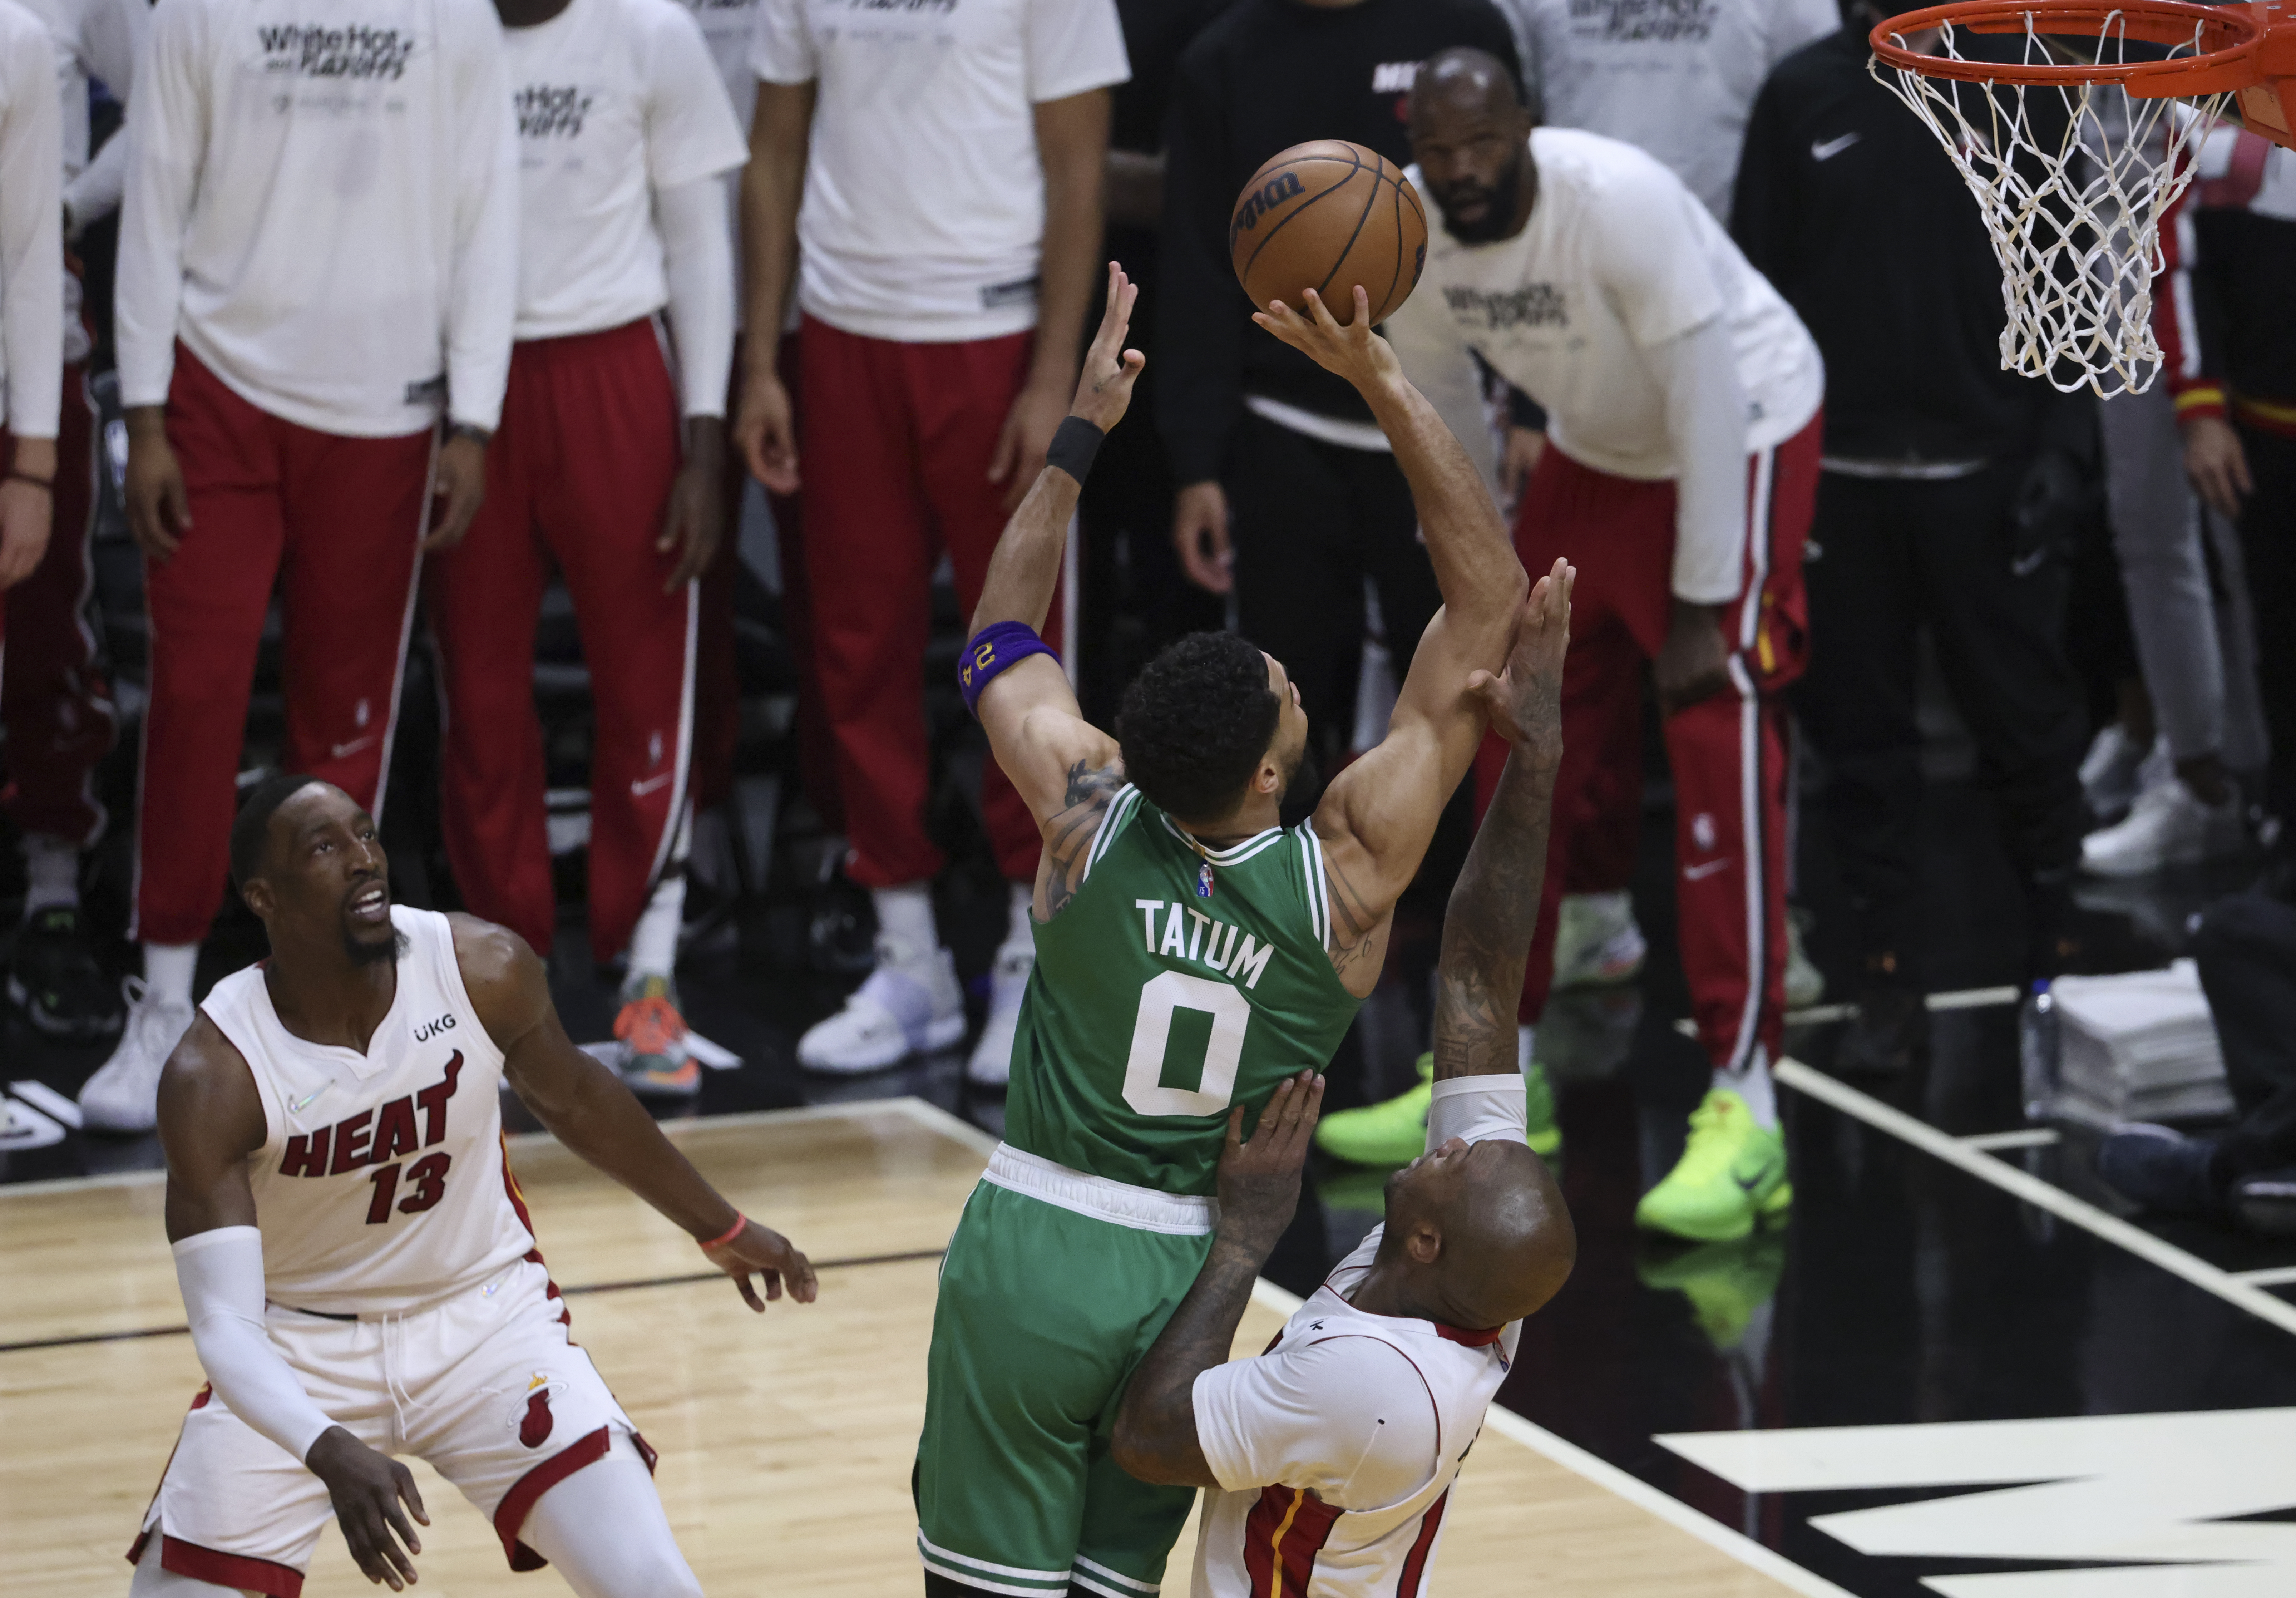 NBA playoffs: Jayson Tatum honors Kobe with armband during Game 7